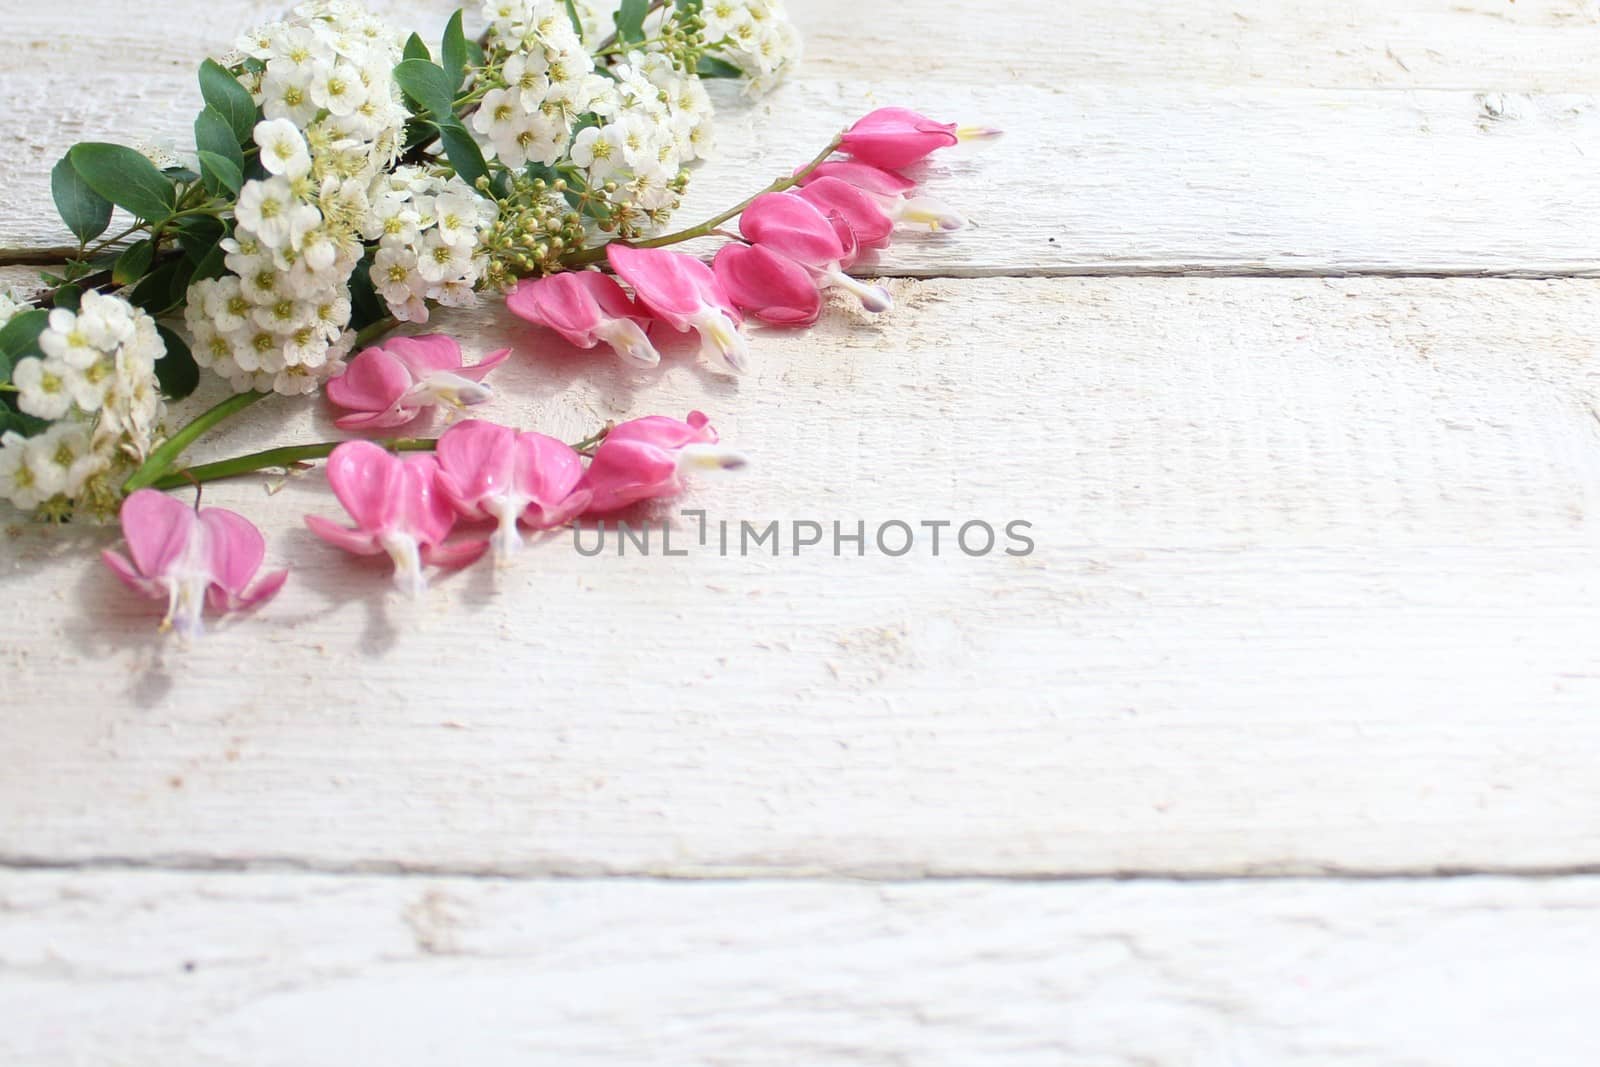 spring flowers on white boards by martina_unbehauen